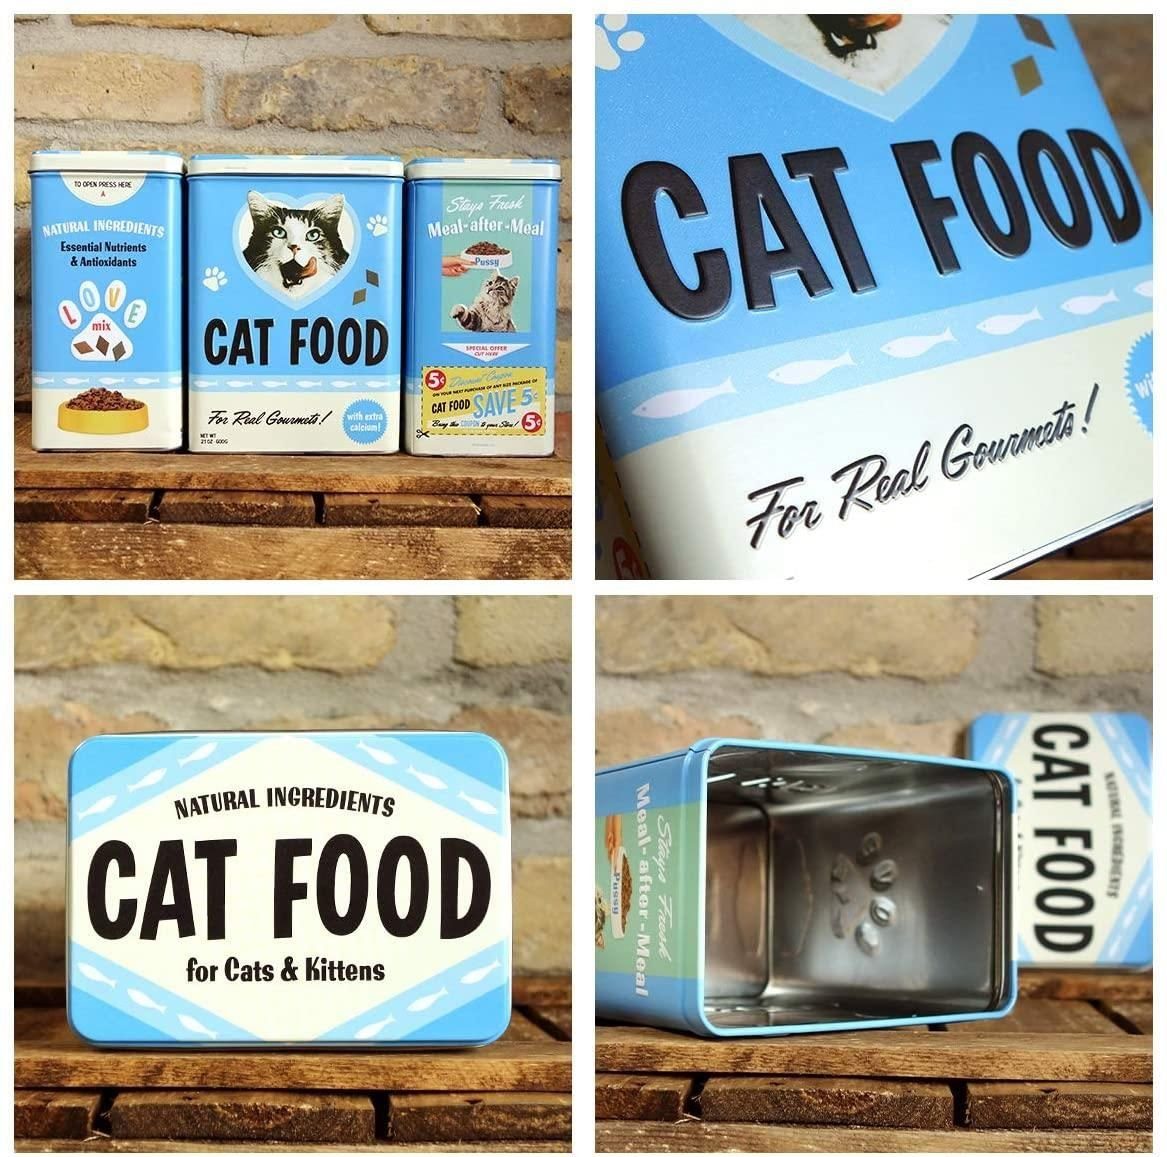 Nostalgic-Art Vorratsdose Kaffeedose Blechdose - Cat Food